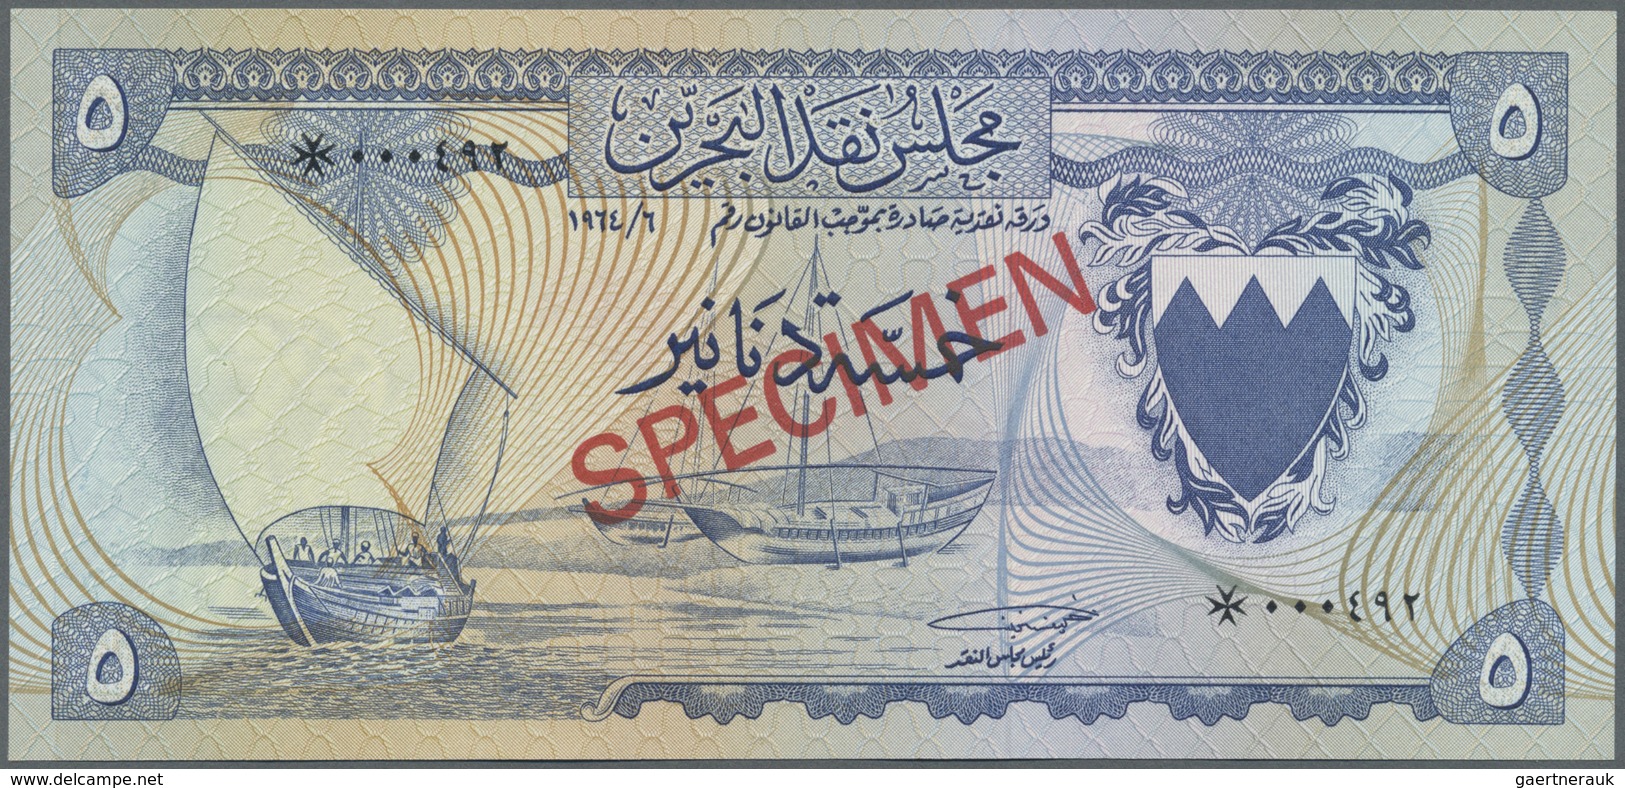 Bahrain: 5 Dinars ND Collectors Series Speicmen With Maltese Cross Prefix, Note Like Pick 5 But Issu - Bahrain